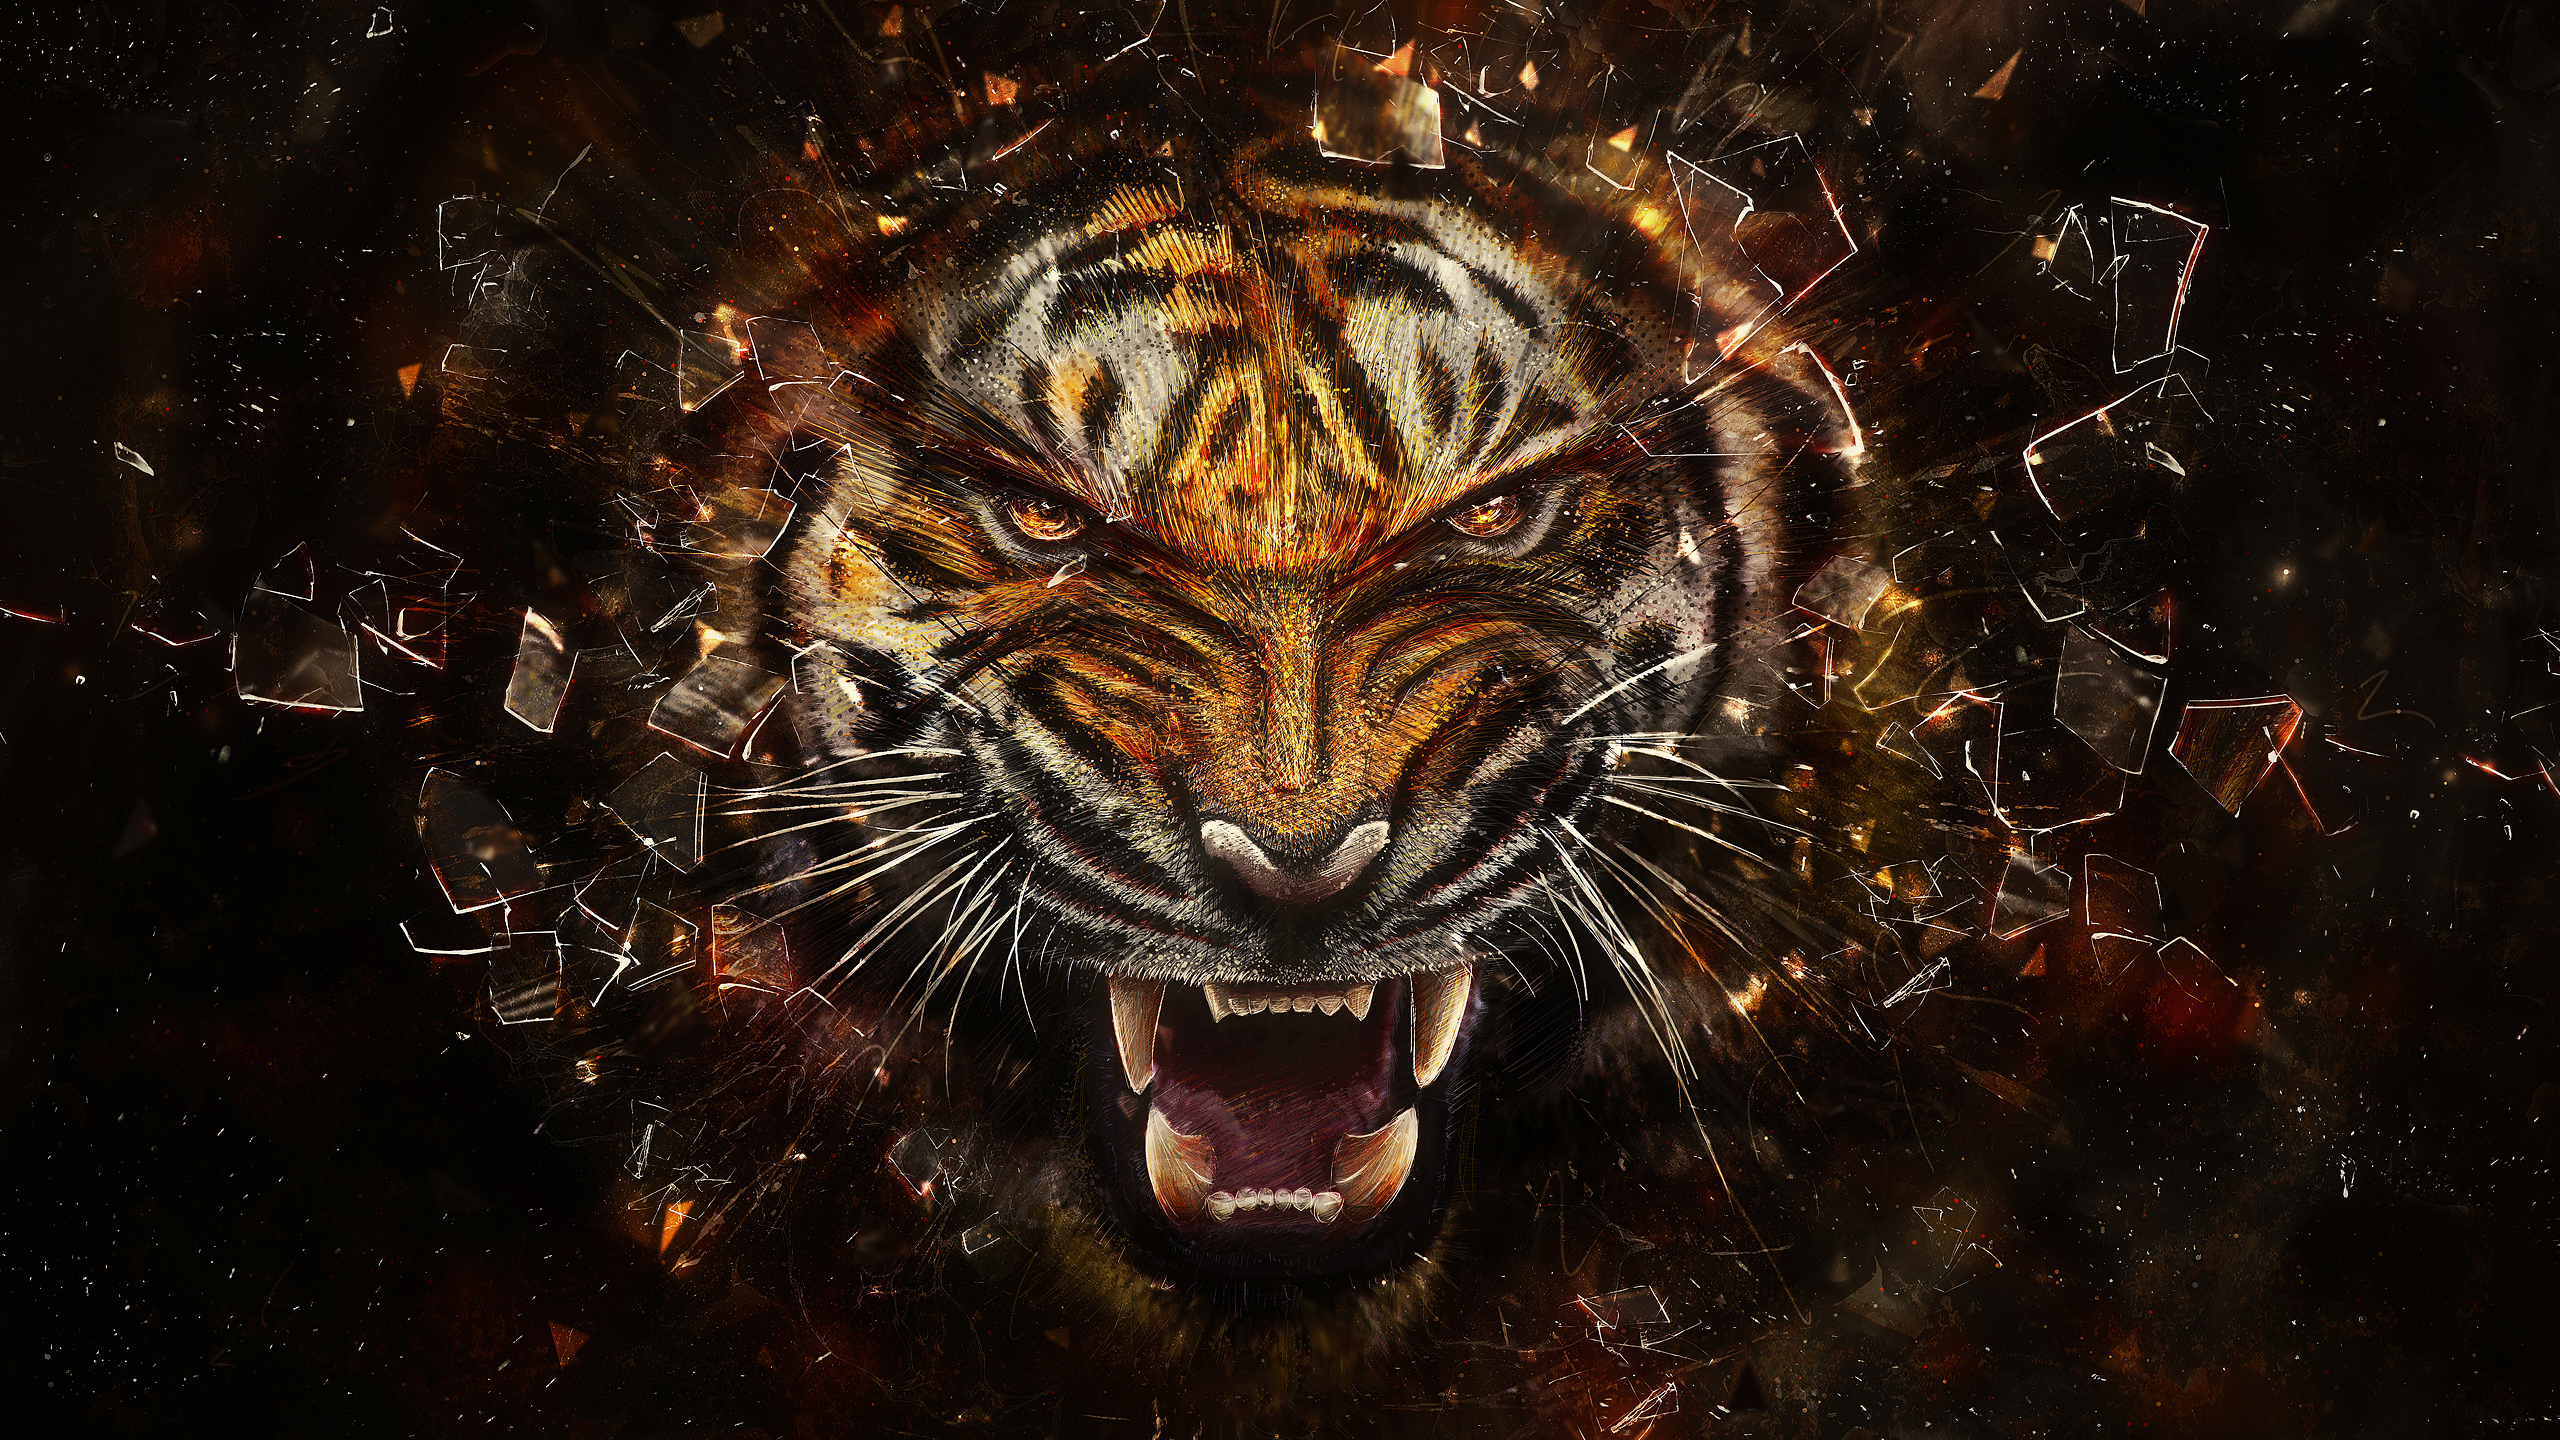 PCデスクトップに動物, 虎, 芸術的画像を無料でダウンロード